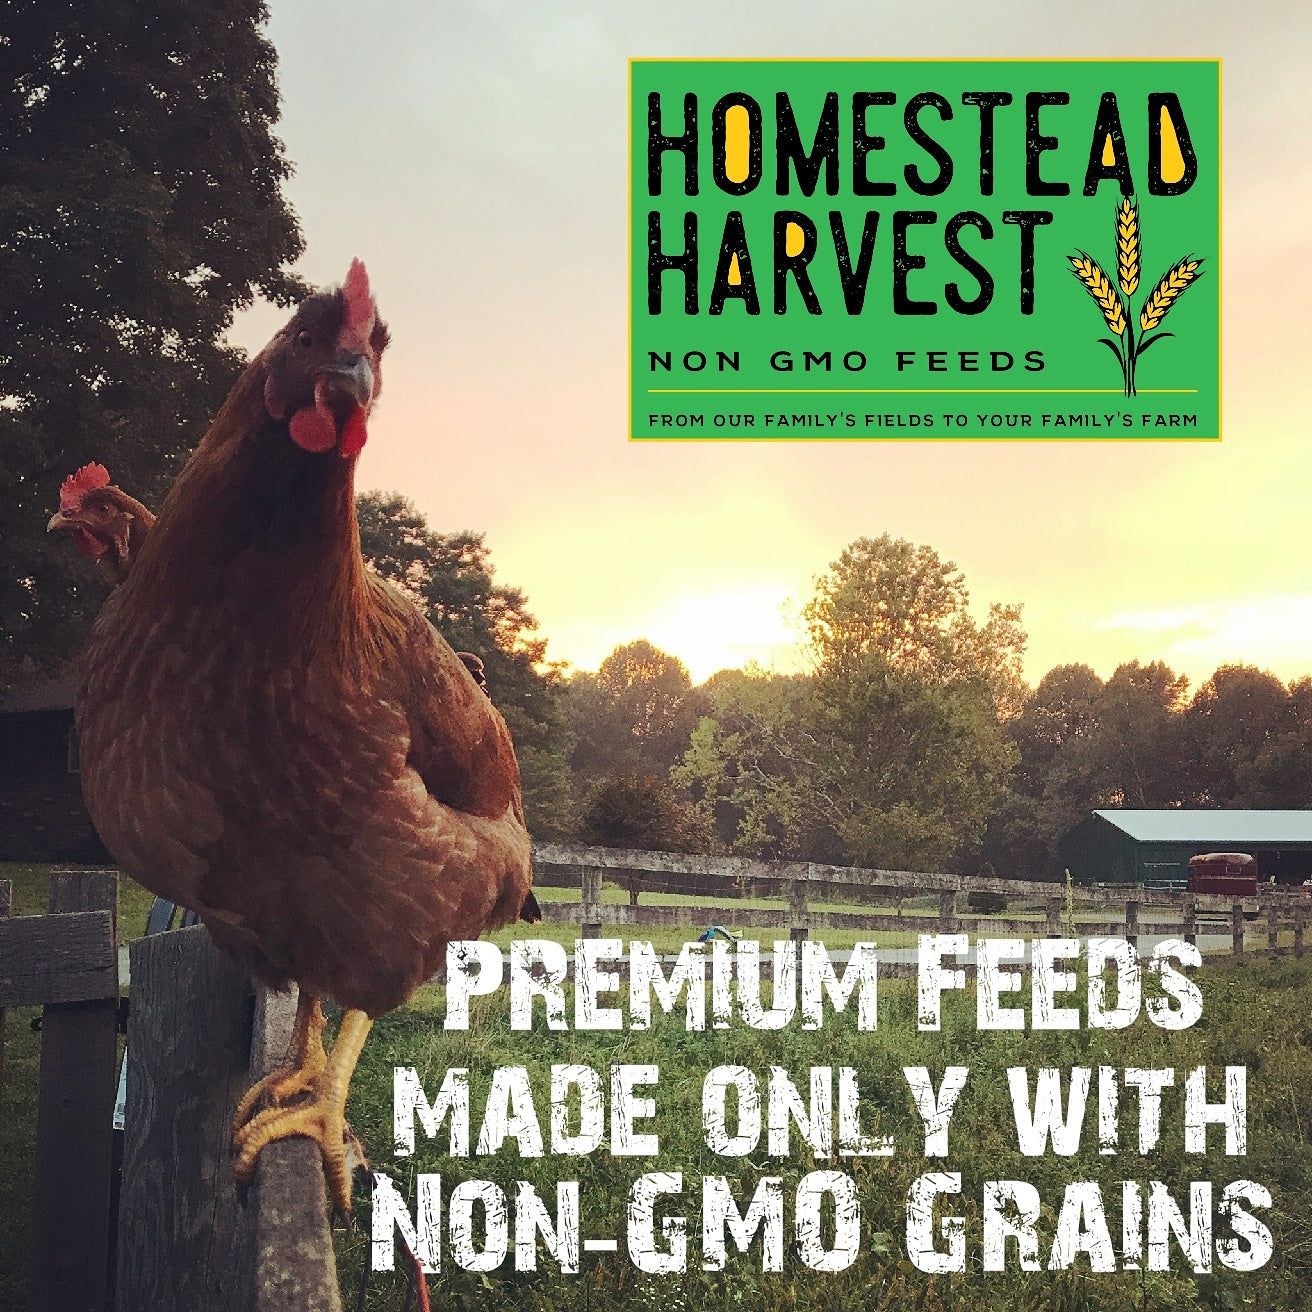 Homestead Harvest Non-GMO Horse Blend 12% For all classes of horses